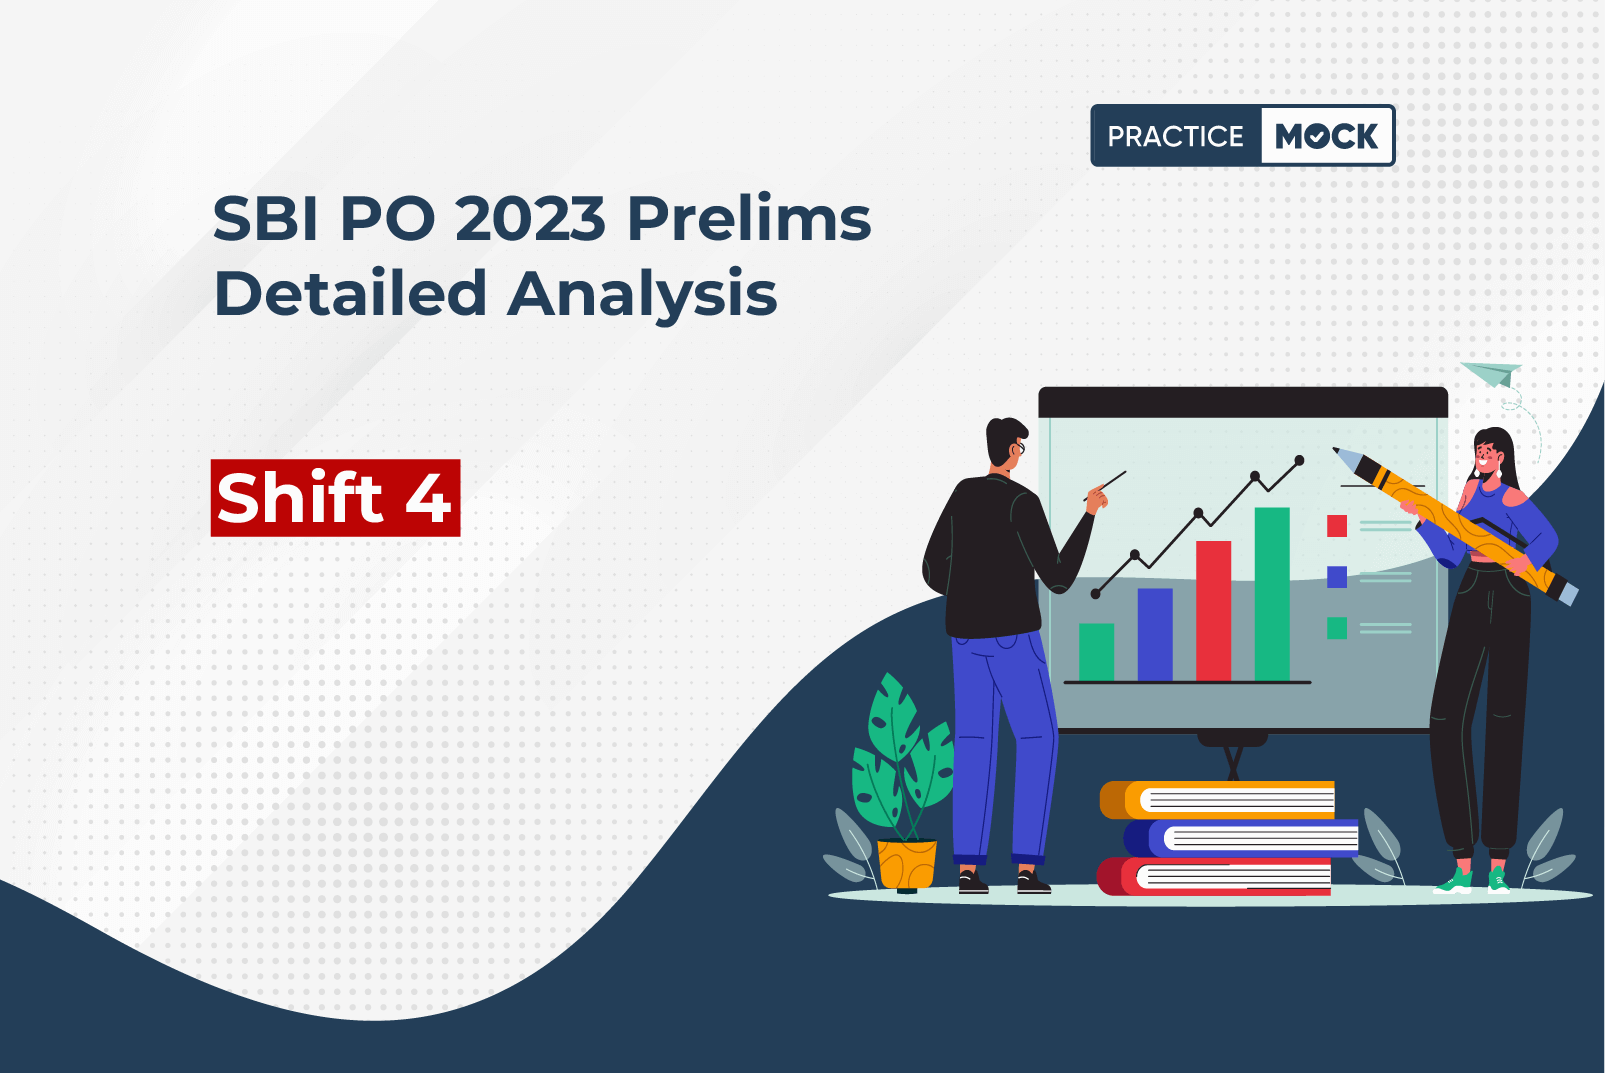 SBI PO 2023 Prelims Shift 4 Detailed Analysis (1)